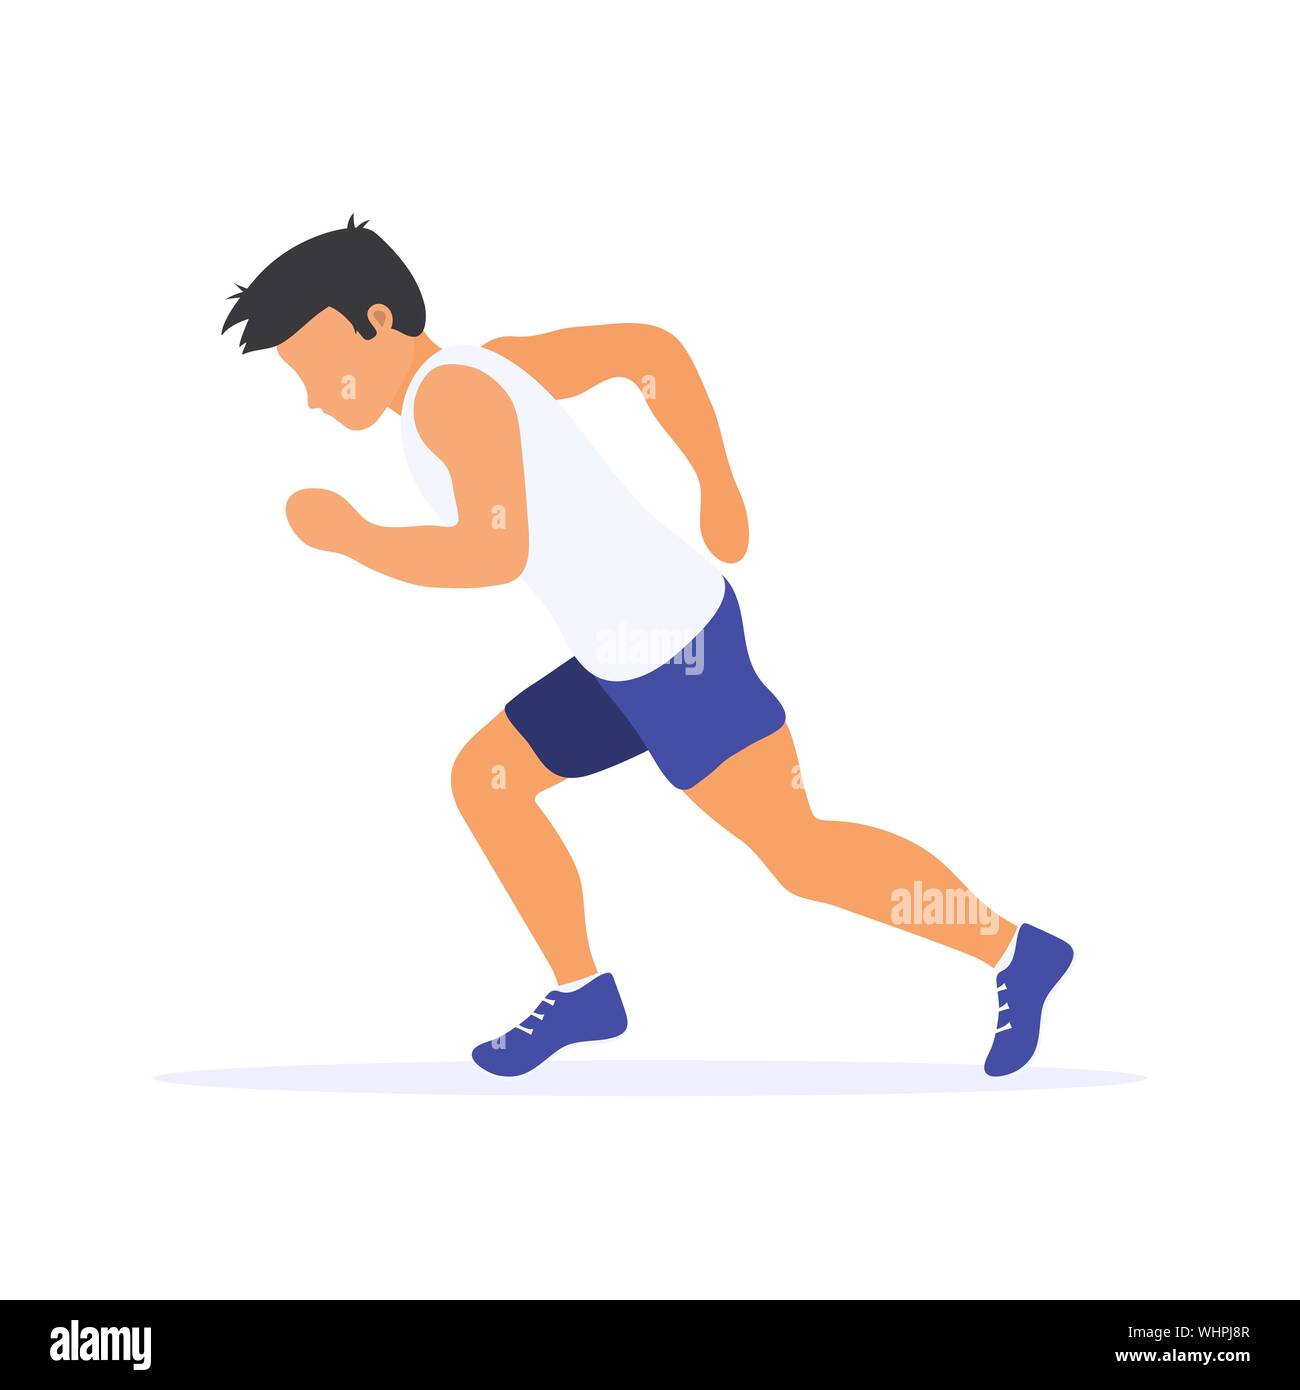 Flat run sports. Бегущий человек картина. Рисунок Бегущий человек с боку. Sports Running vector.